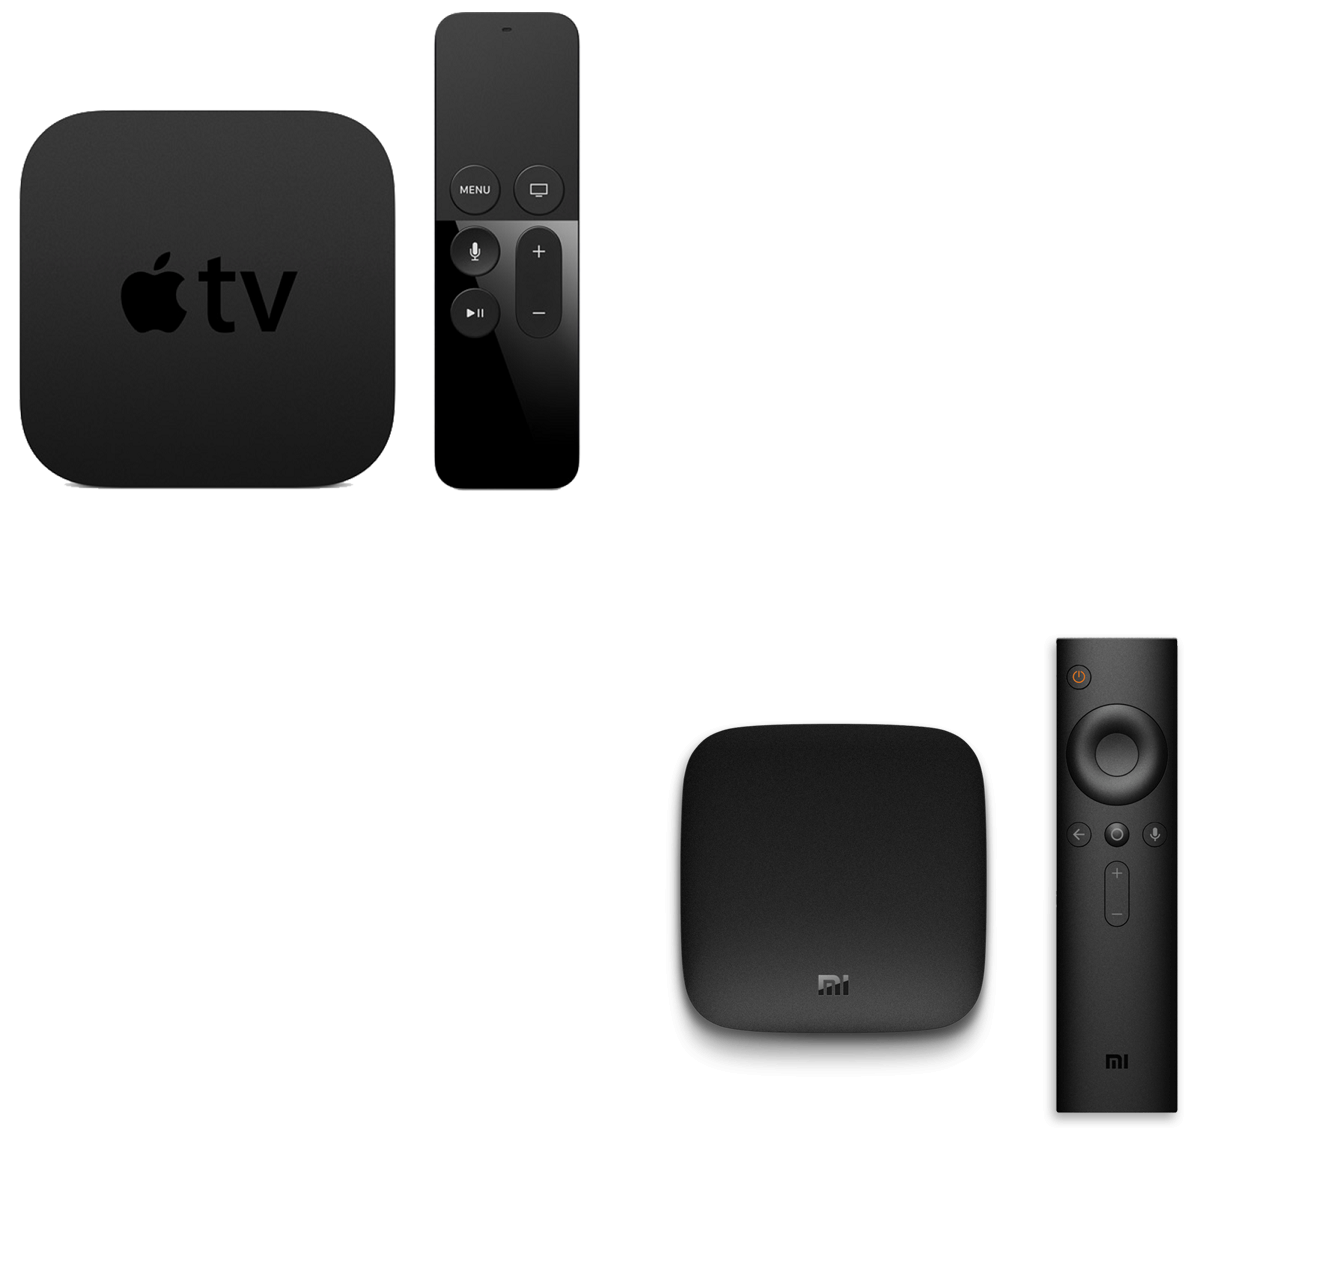 motivo Dedicar Íntimo Apple TV vs Android TV - Mobile Industry Review